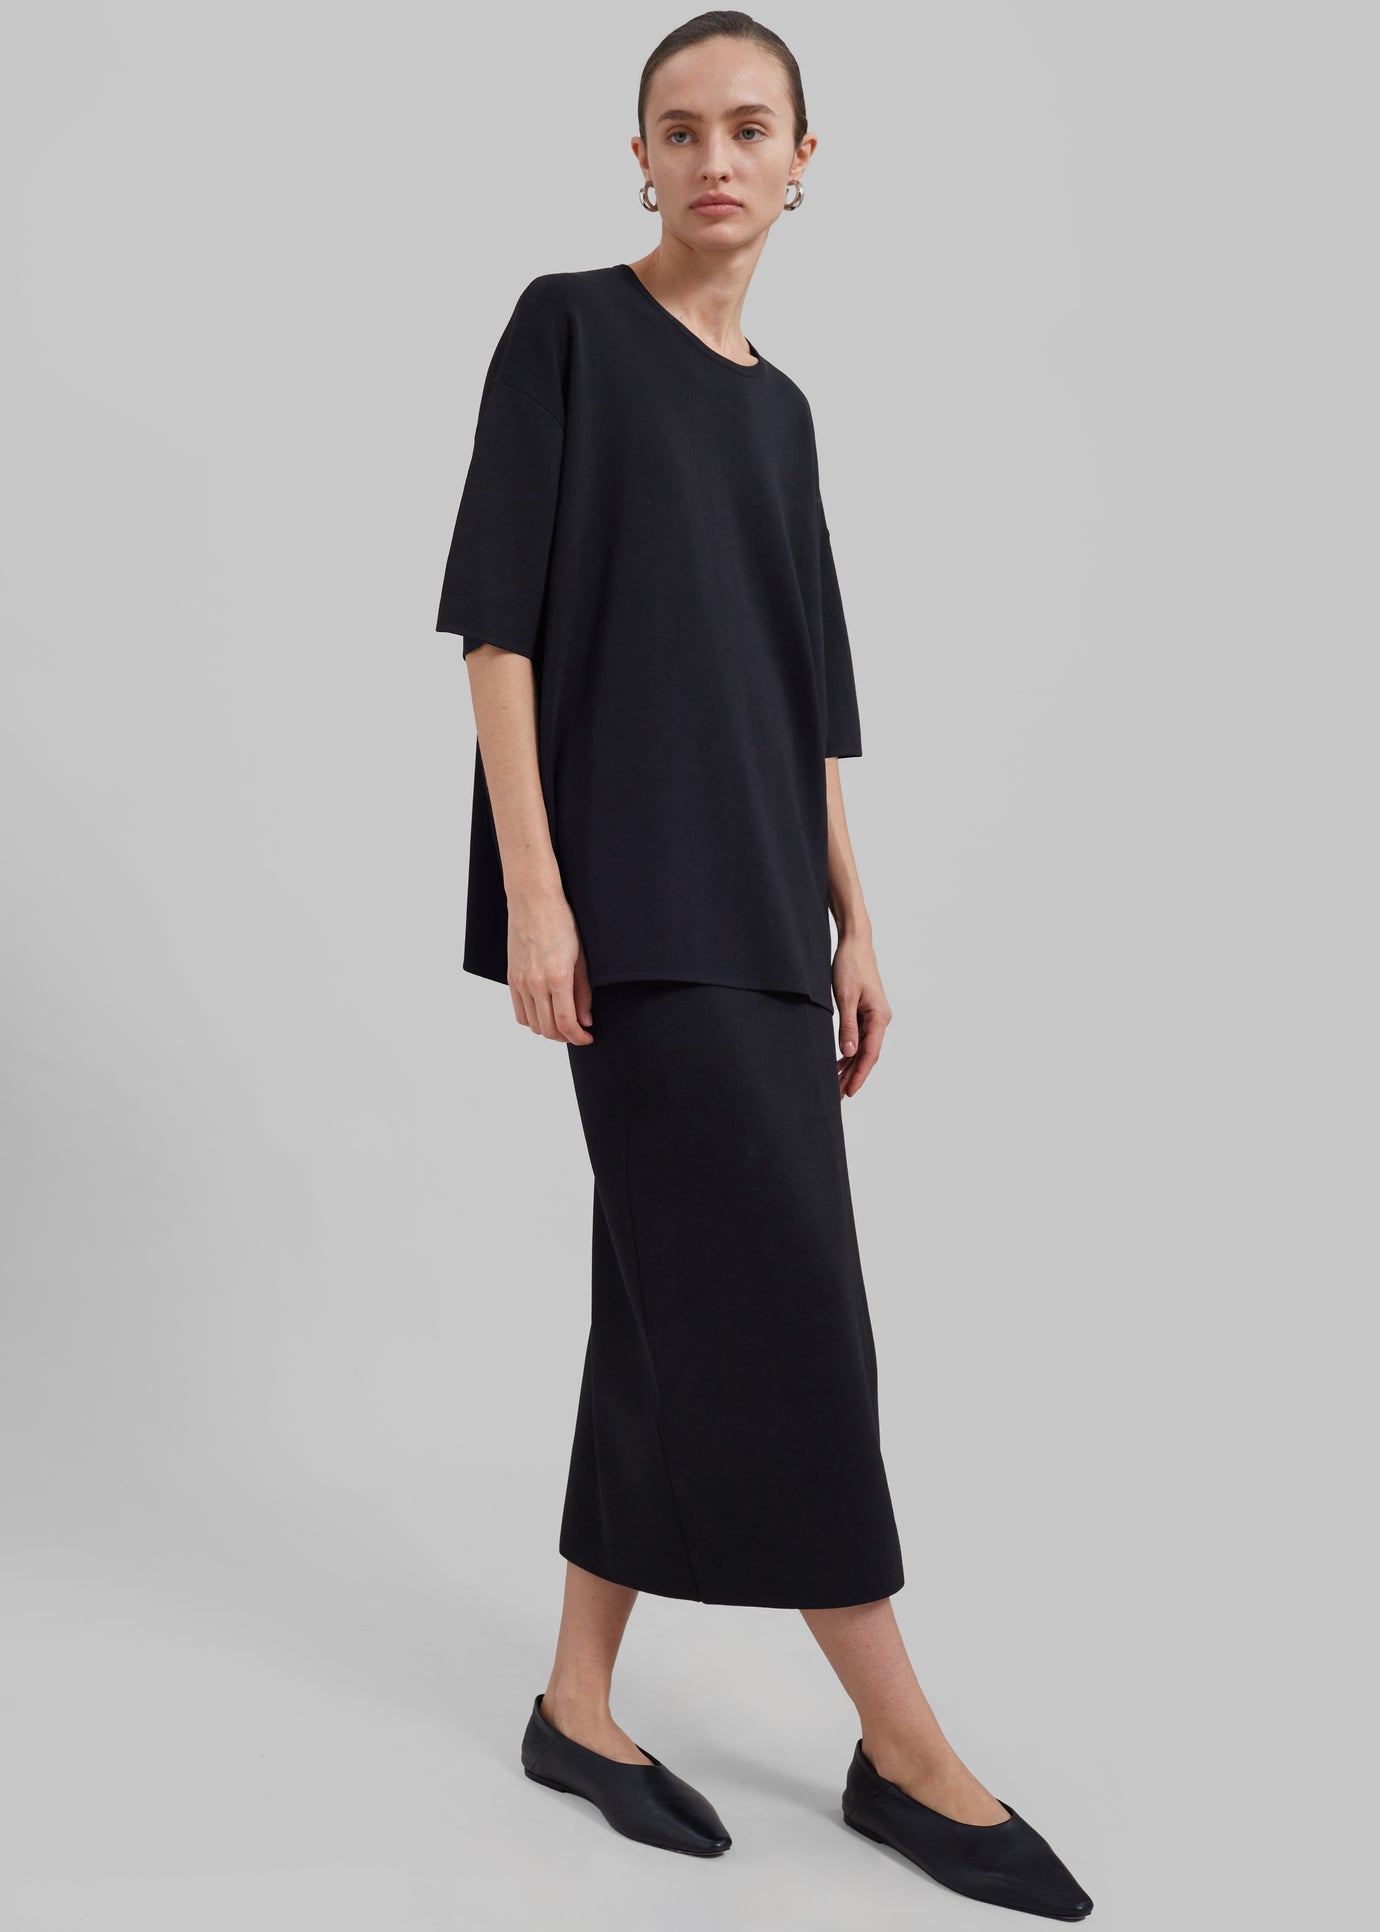 Solange Knit Pencil Skirt - Black